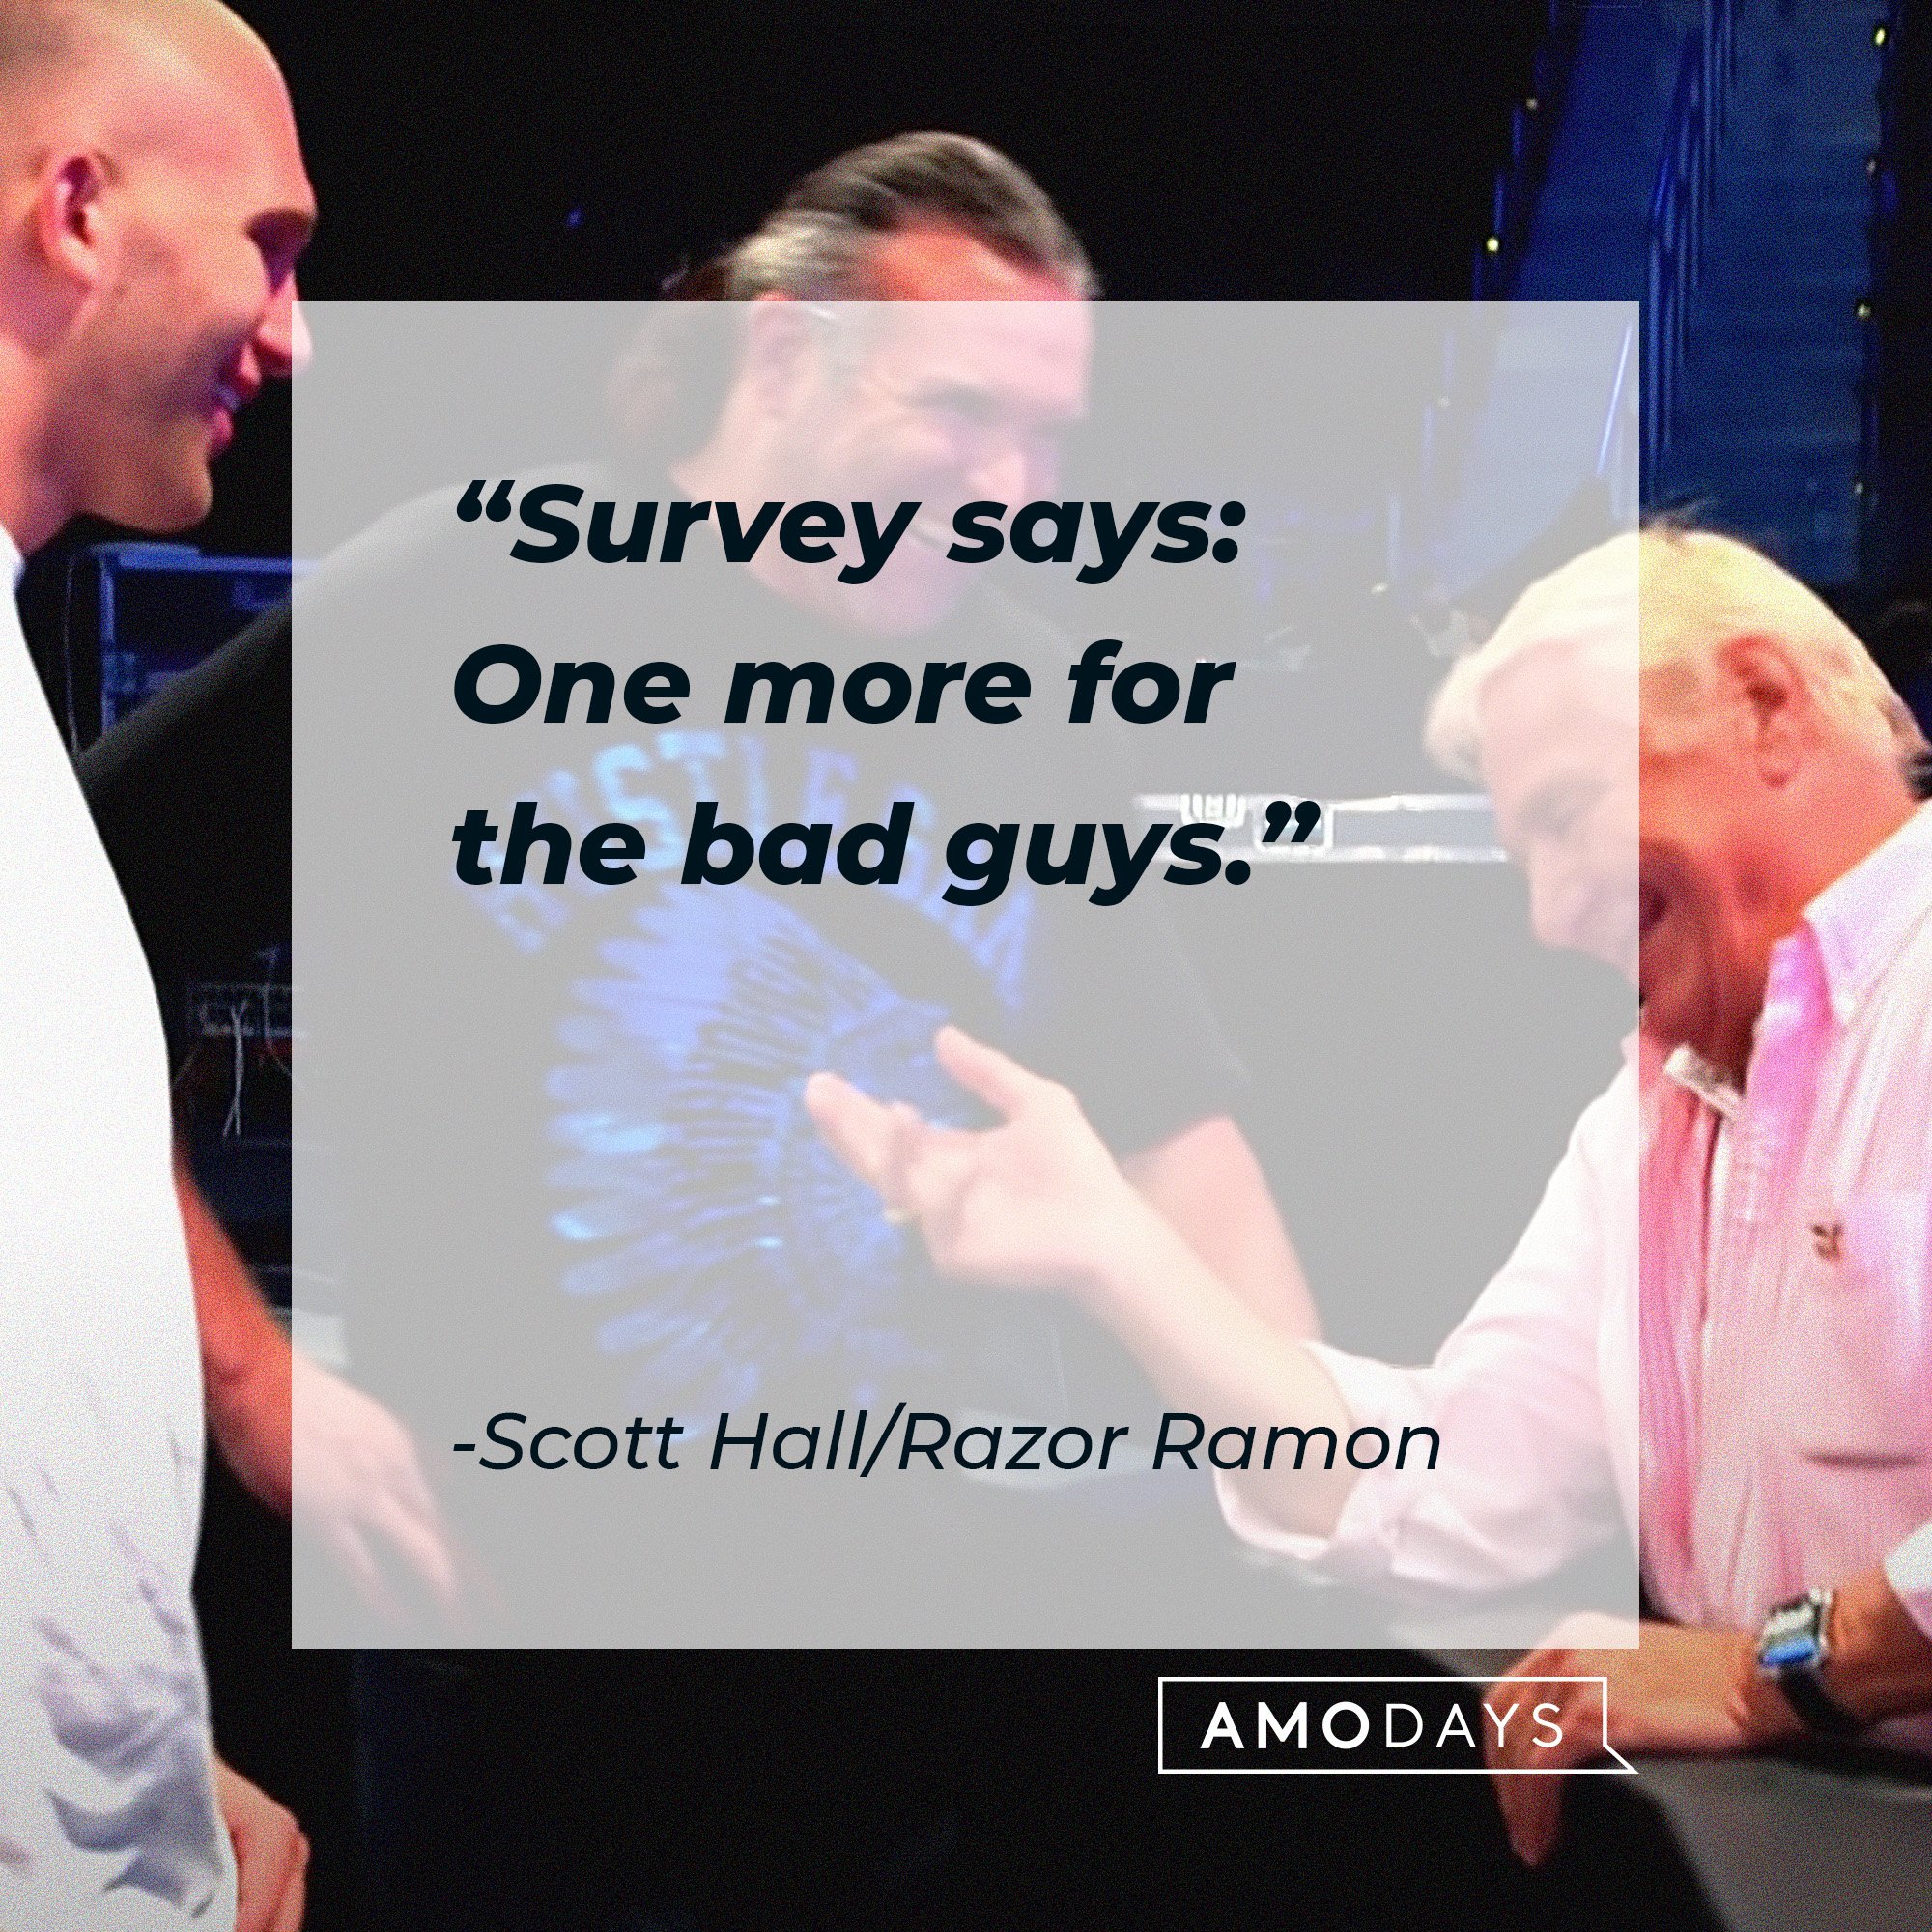 Scott Hall/Razor Ramon's quote: "Survey says: One more for the bad guys."| Image: AmoDays